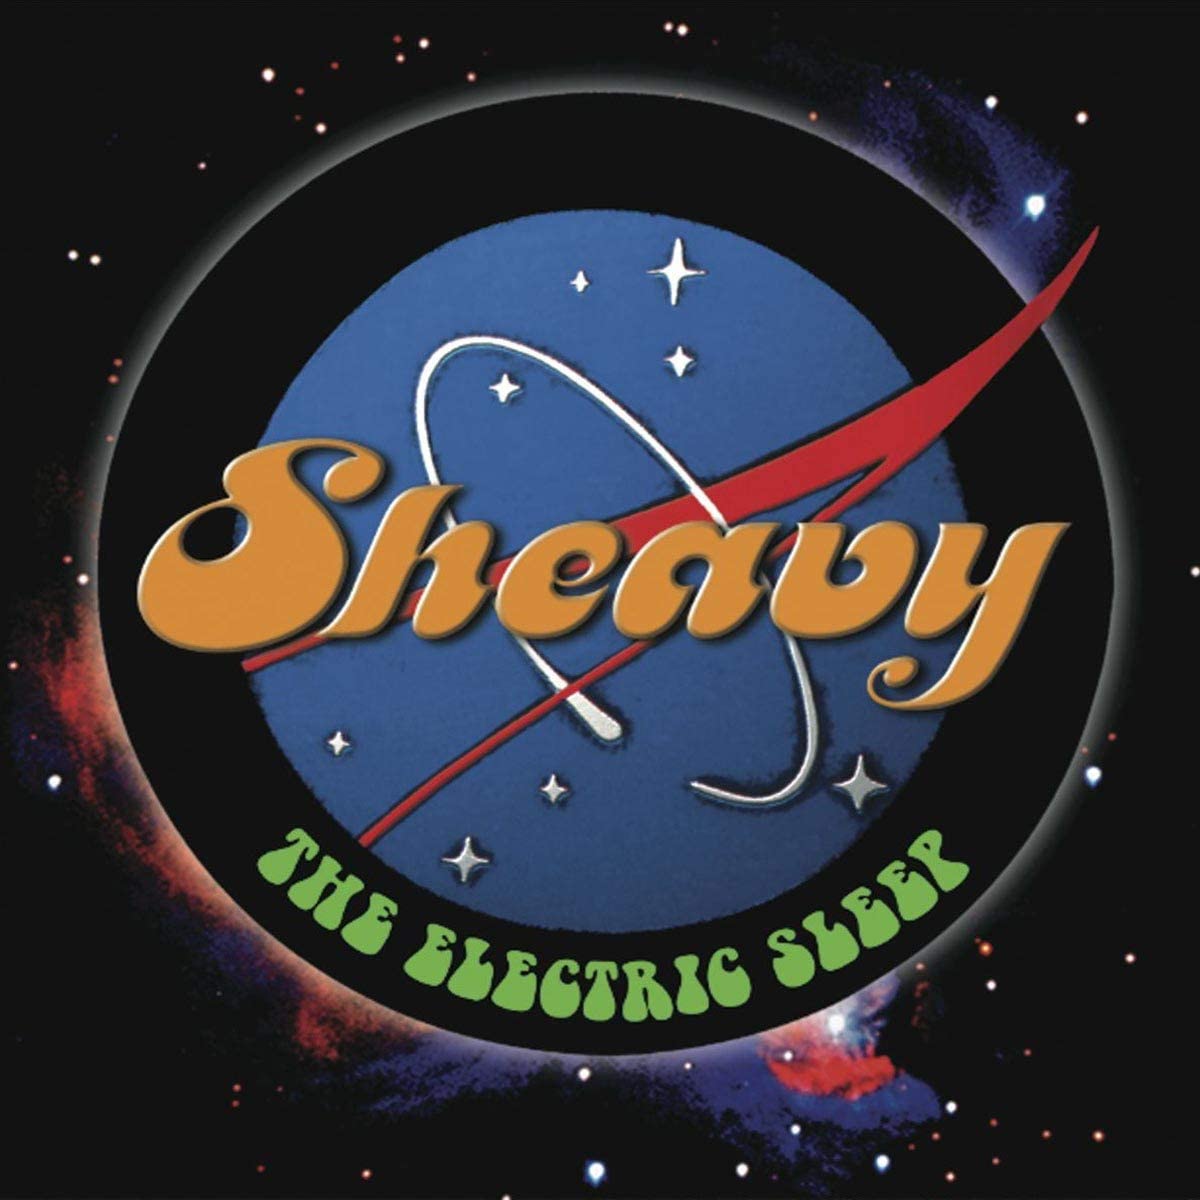 Sheavy "The Electric Sheep" 2x12" Vinyl